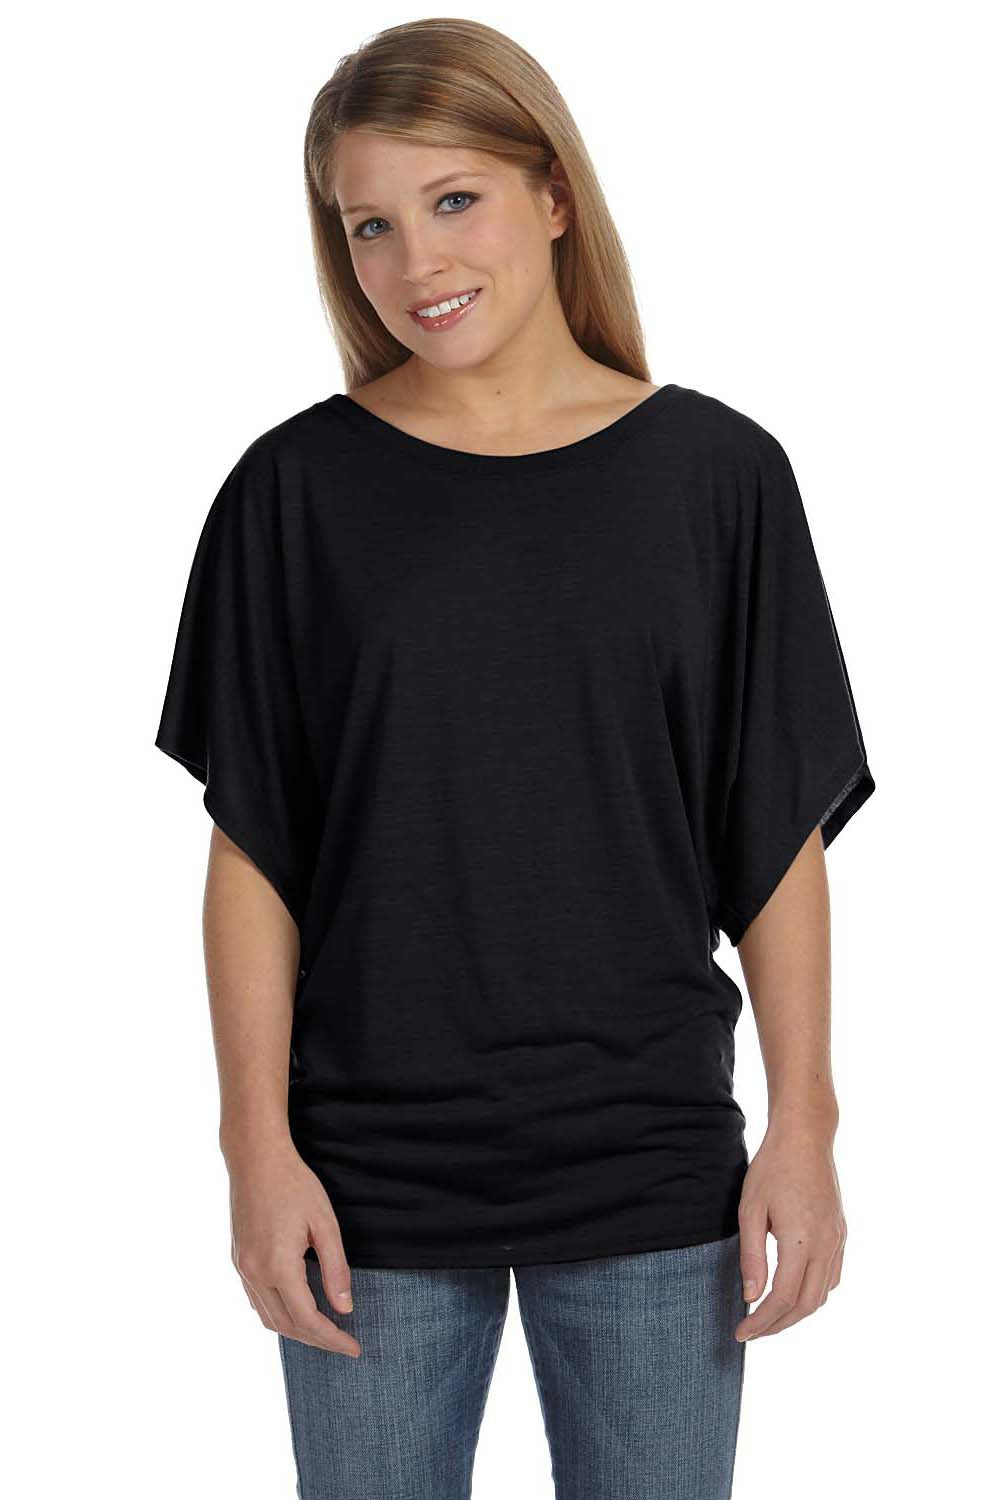 Black + — Flowy Canvas T-Shirt Sleeve Dolman Wide Bella Draped Neck Womens 8821 Short